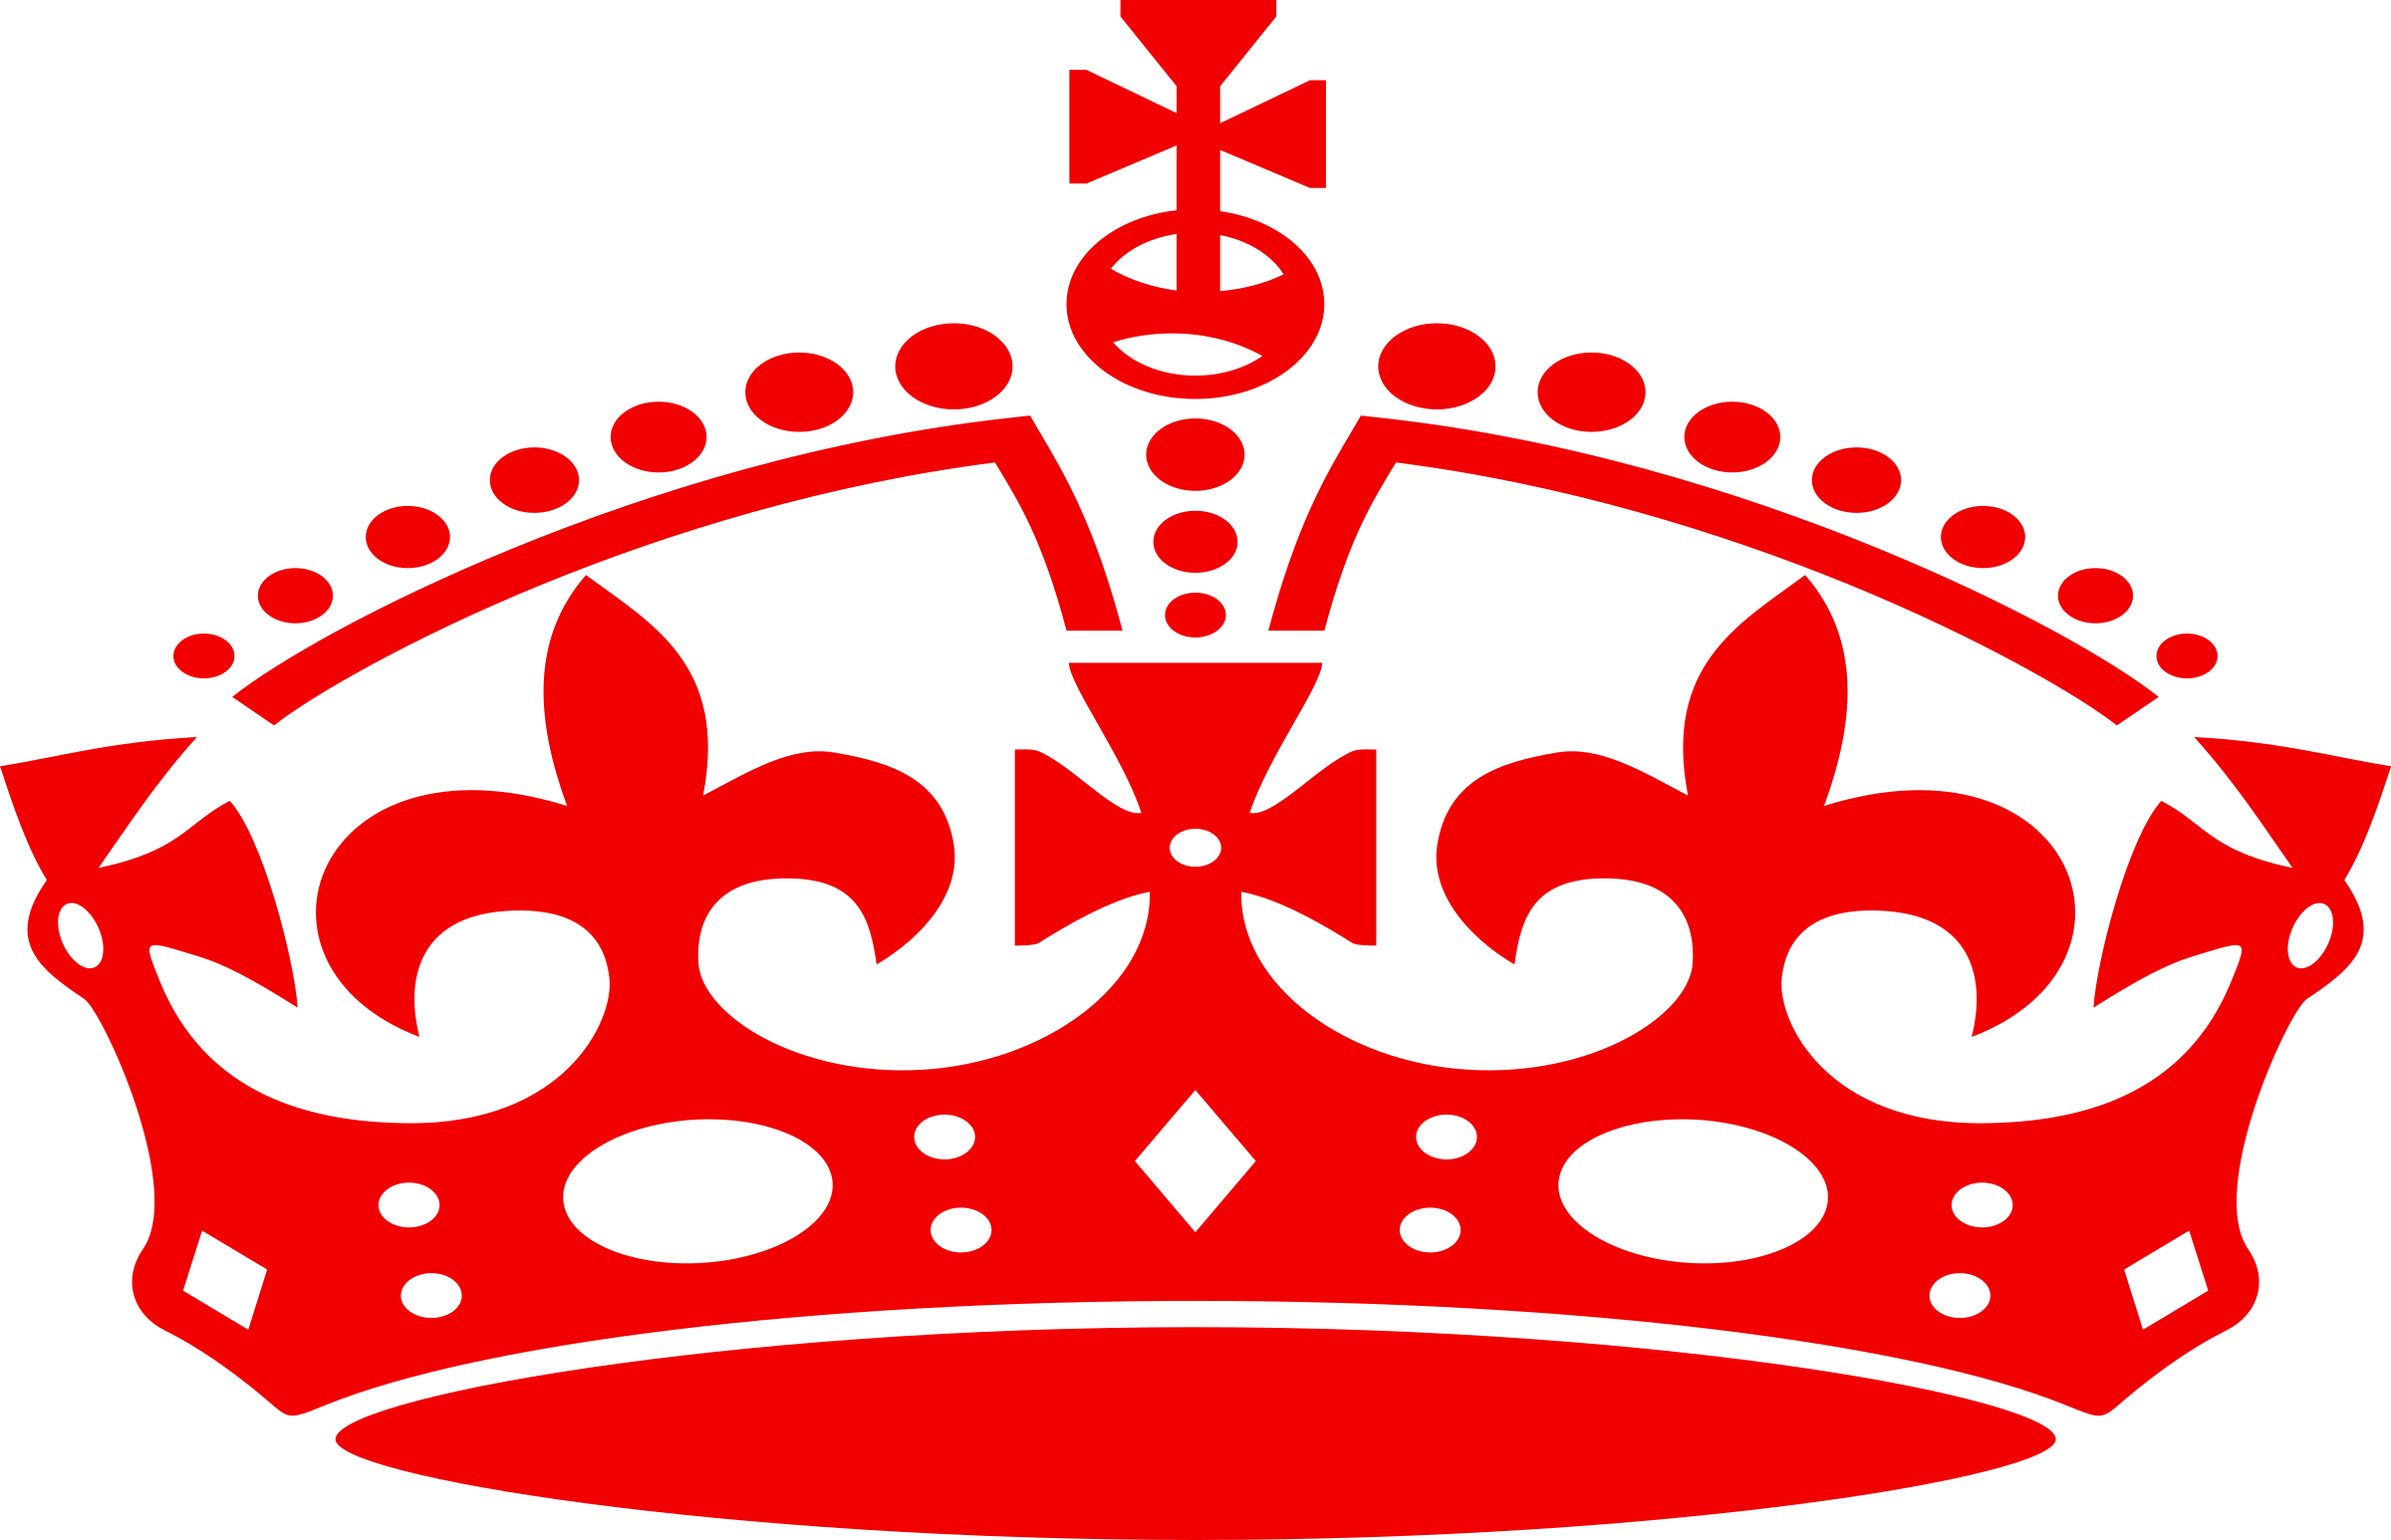 Jubilee crown red SVG Clip arts